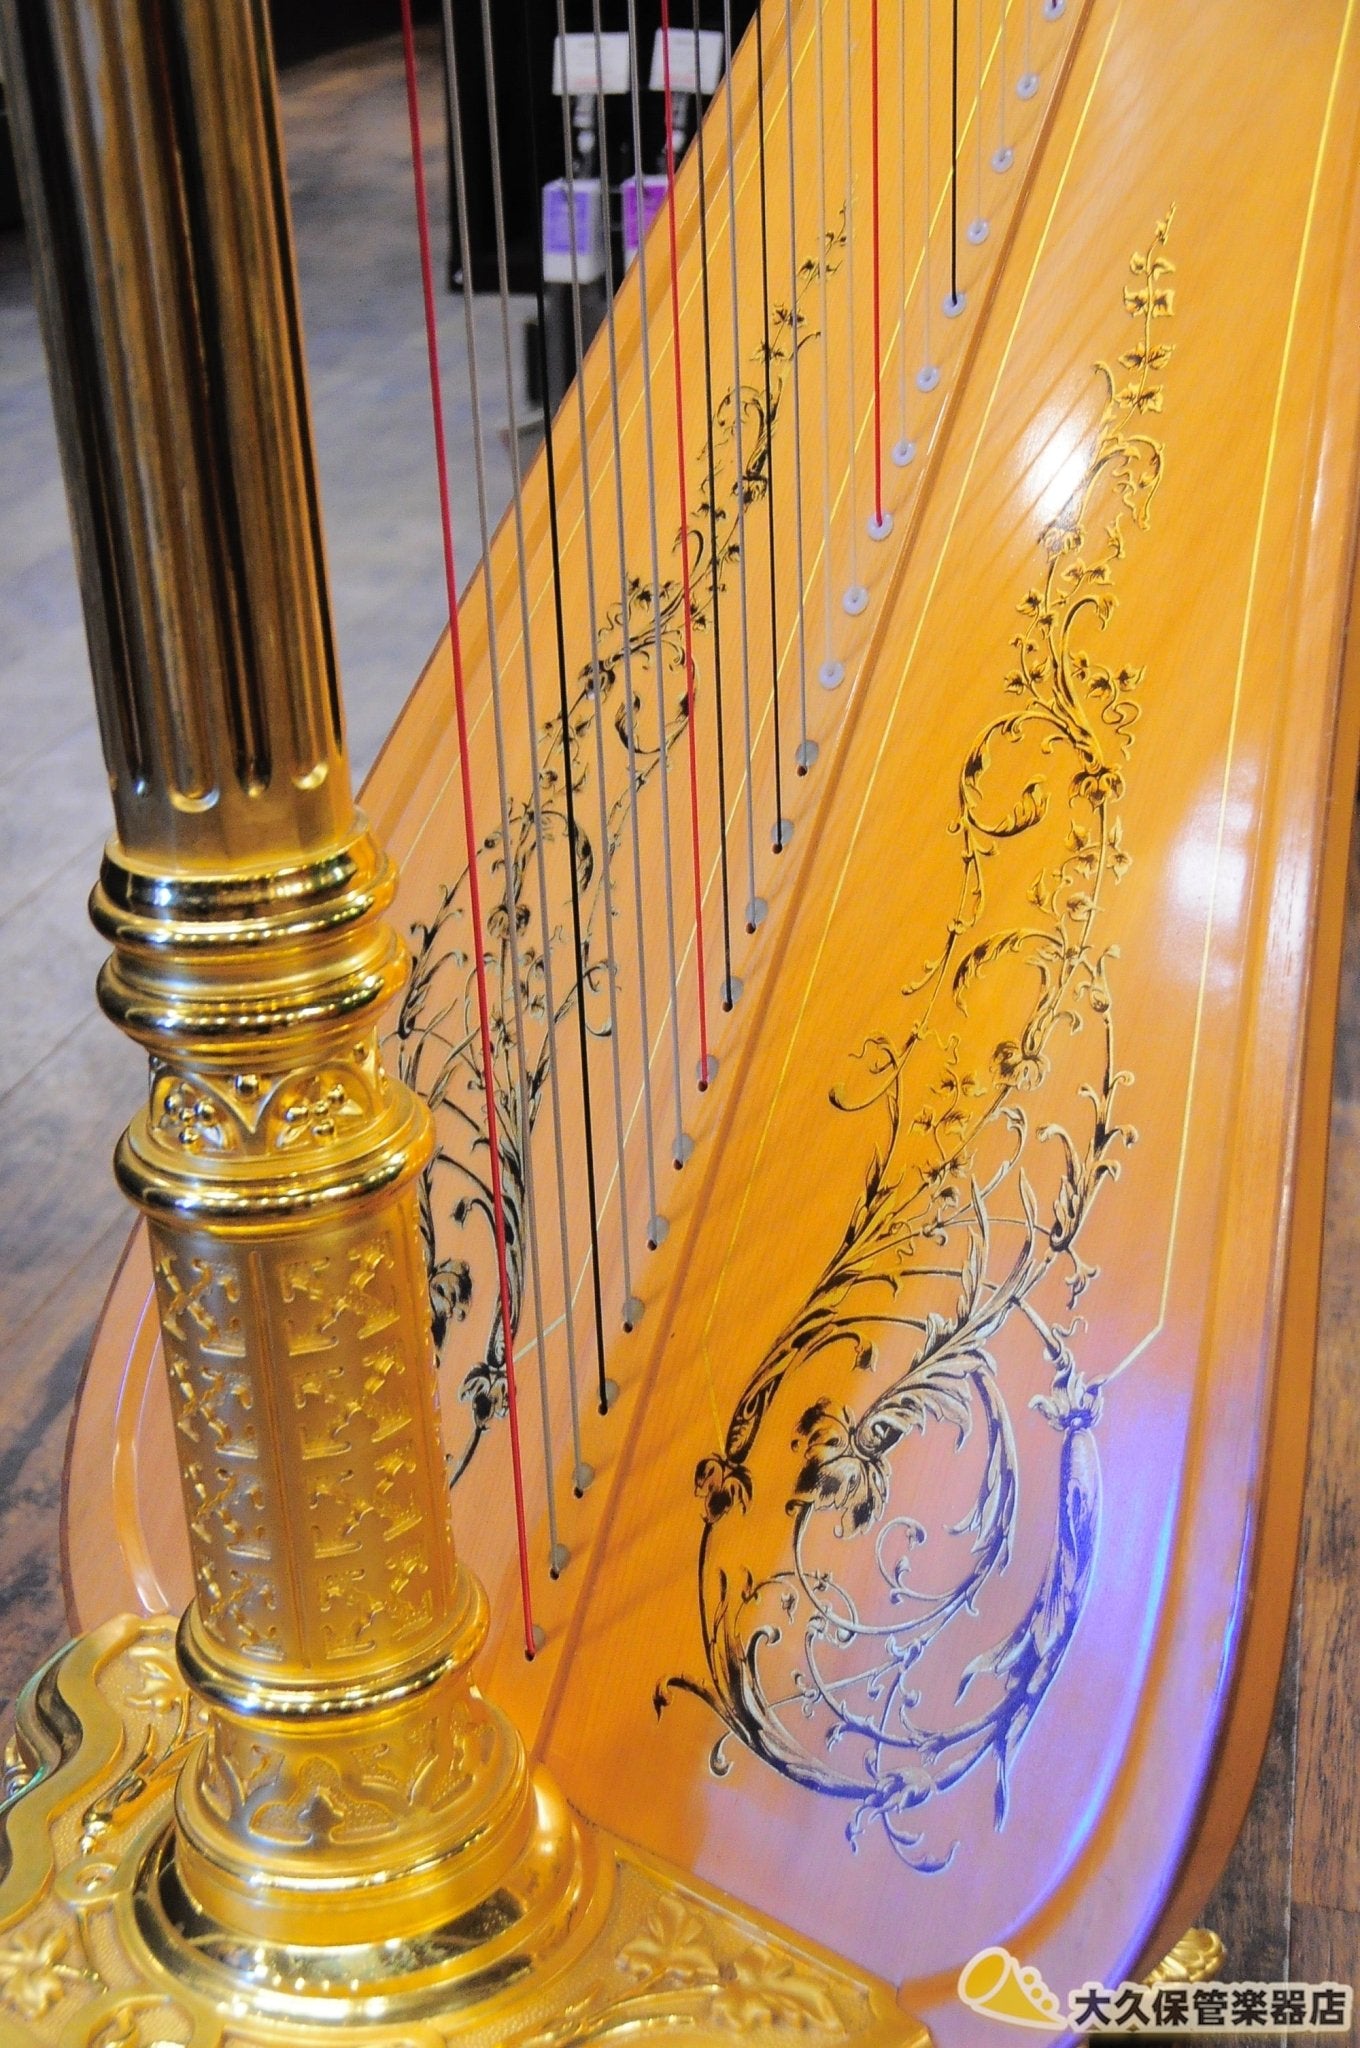 Lion & Healy PREMIUM STYLE 23 GOLD Grand Harp